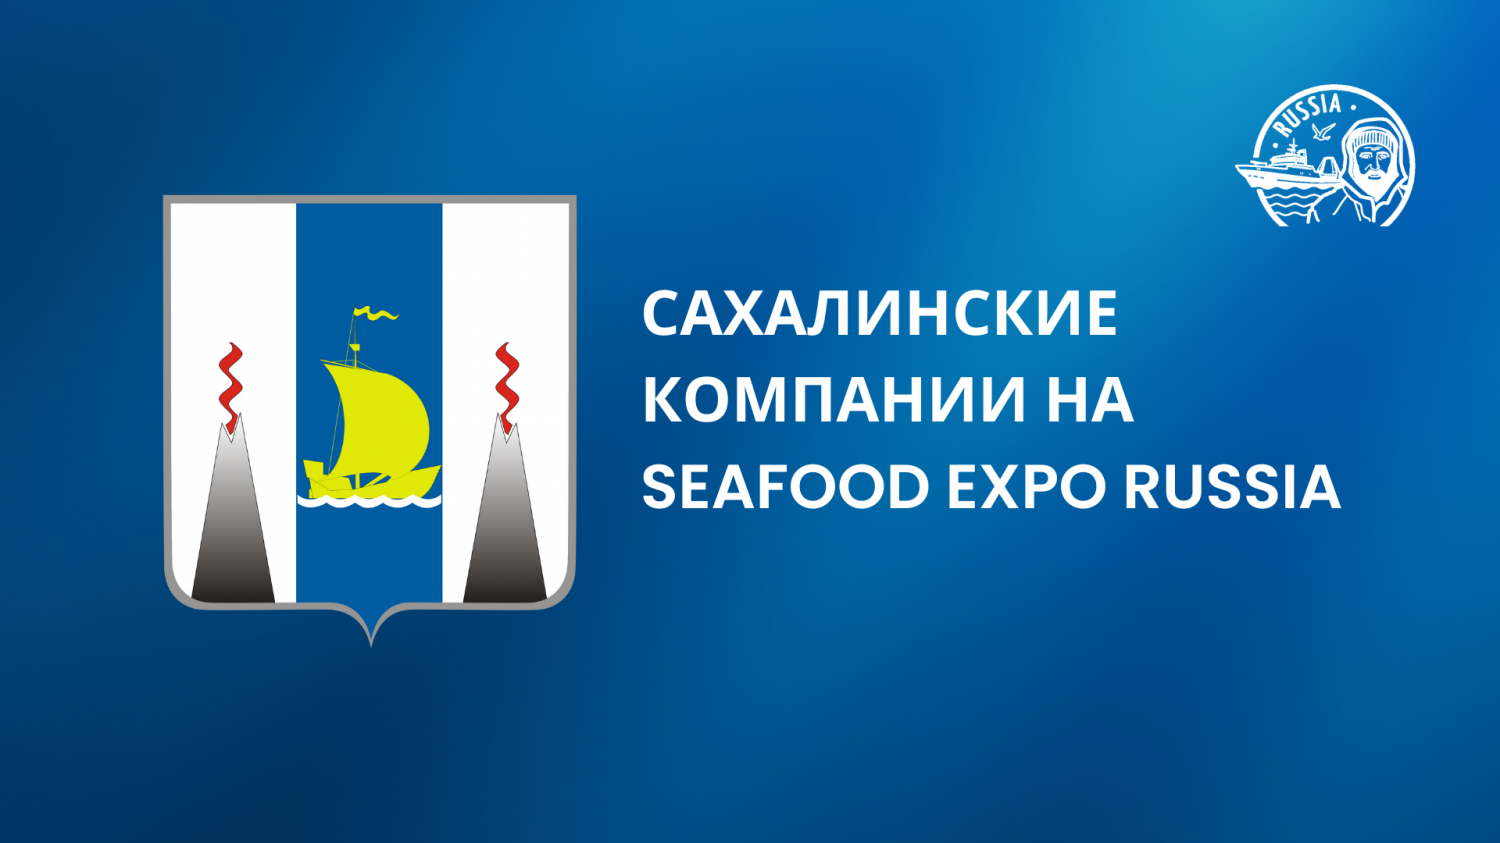 Сахалинские компании готовятся к Seafood Expo Russia 2022